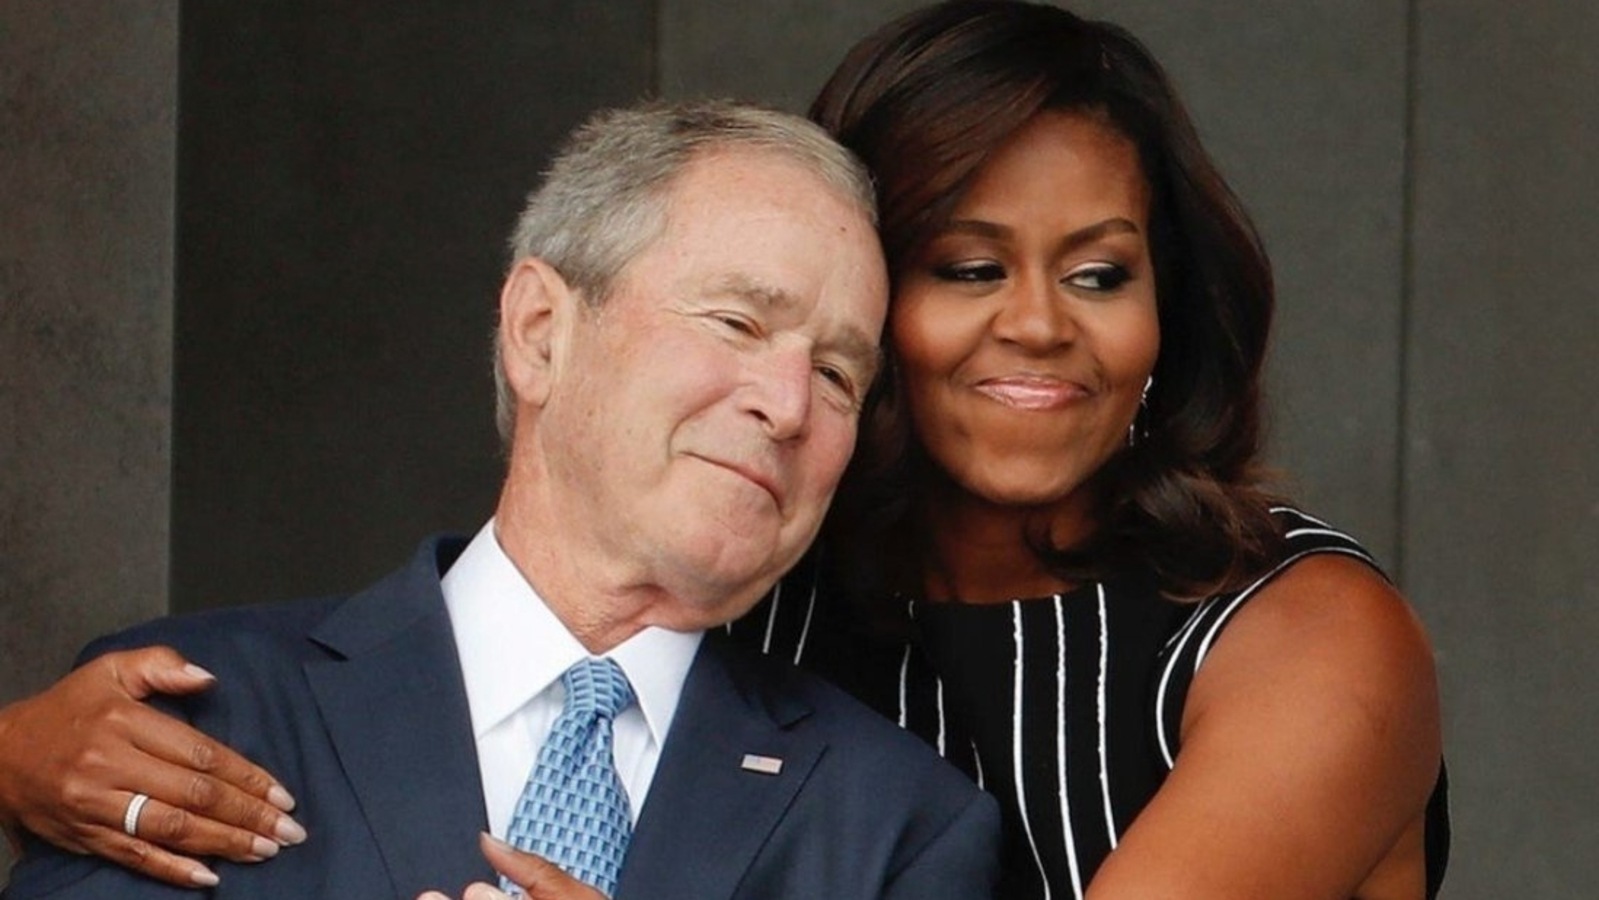    George W. Bush med vakker, Kone Laura Bush 